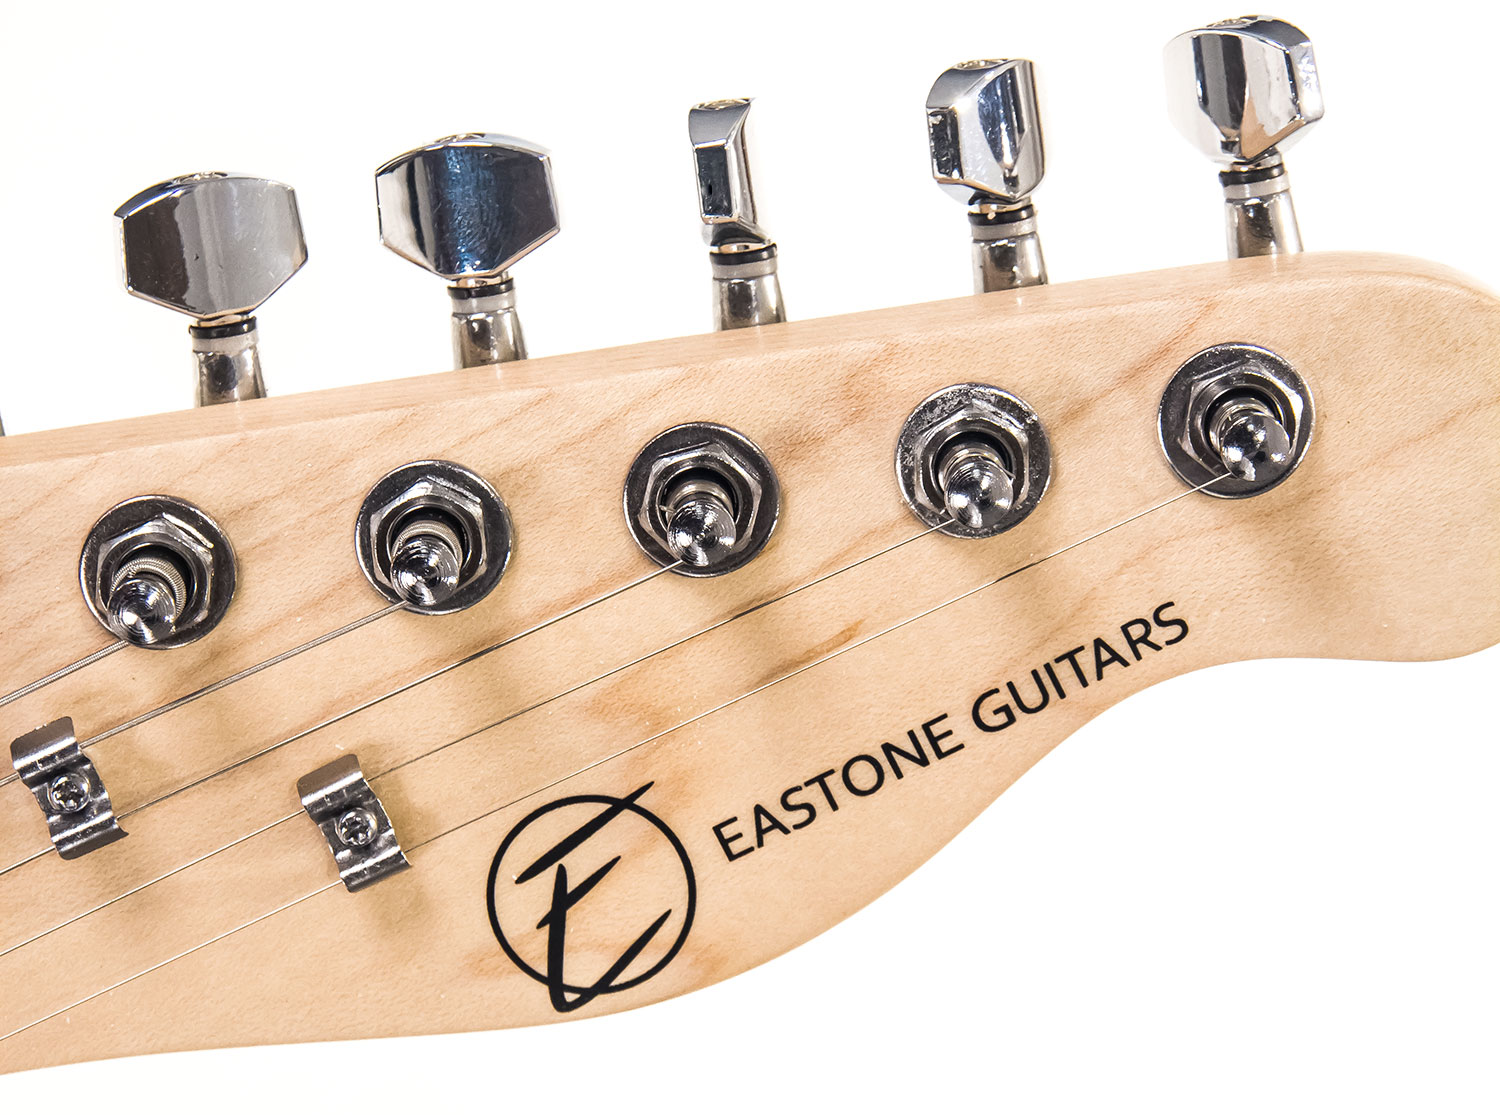 Eastone Tl70 Ss Ht Rw - Ivory - Televorm elektrische gitaar - Variation 4